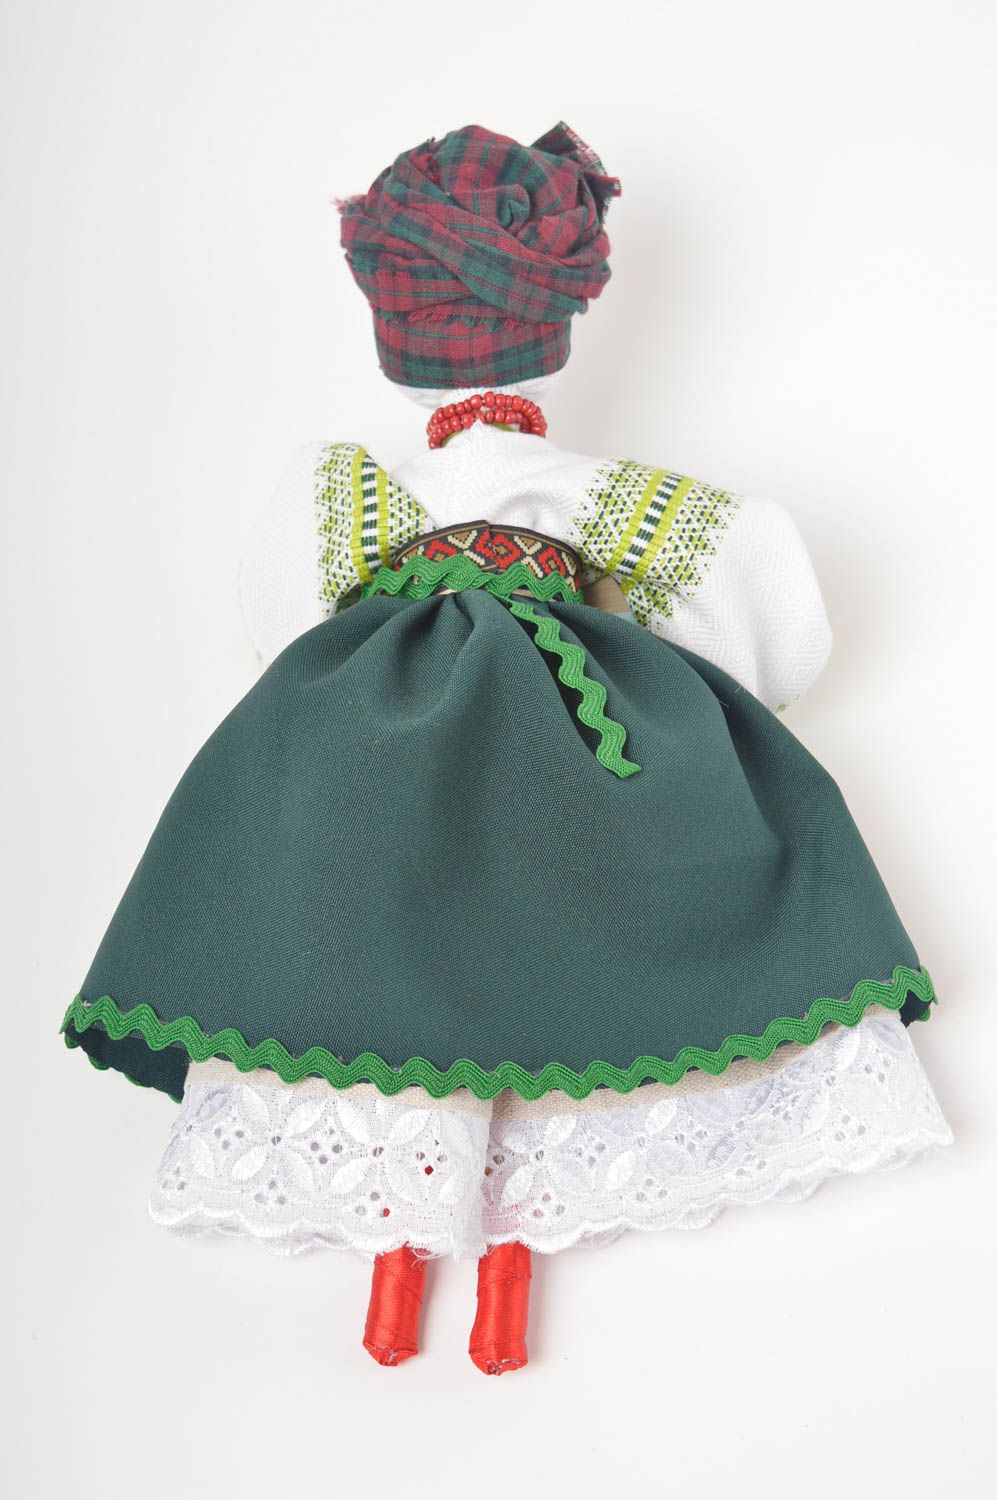 Handmade doll in ethnic dress stuffed toy designer childrens toy decor ideas photo 4